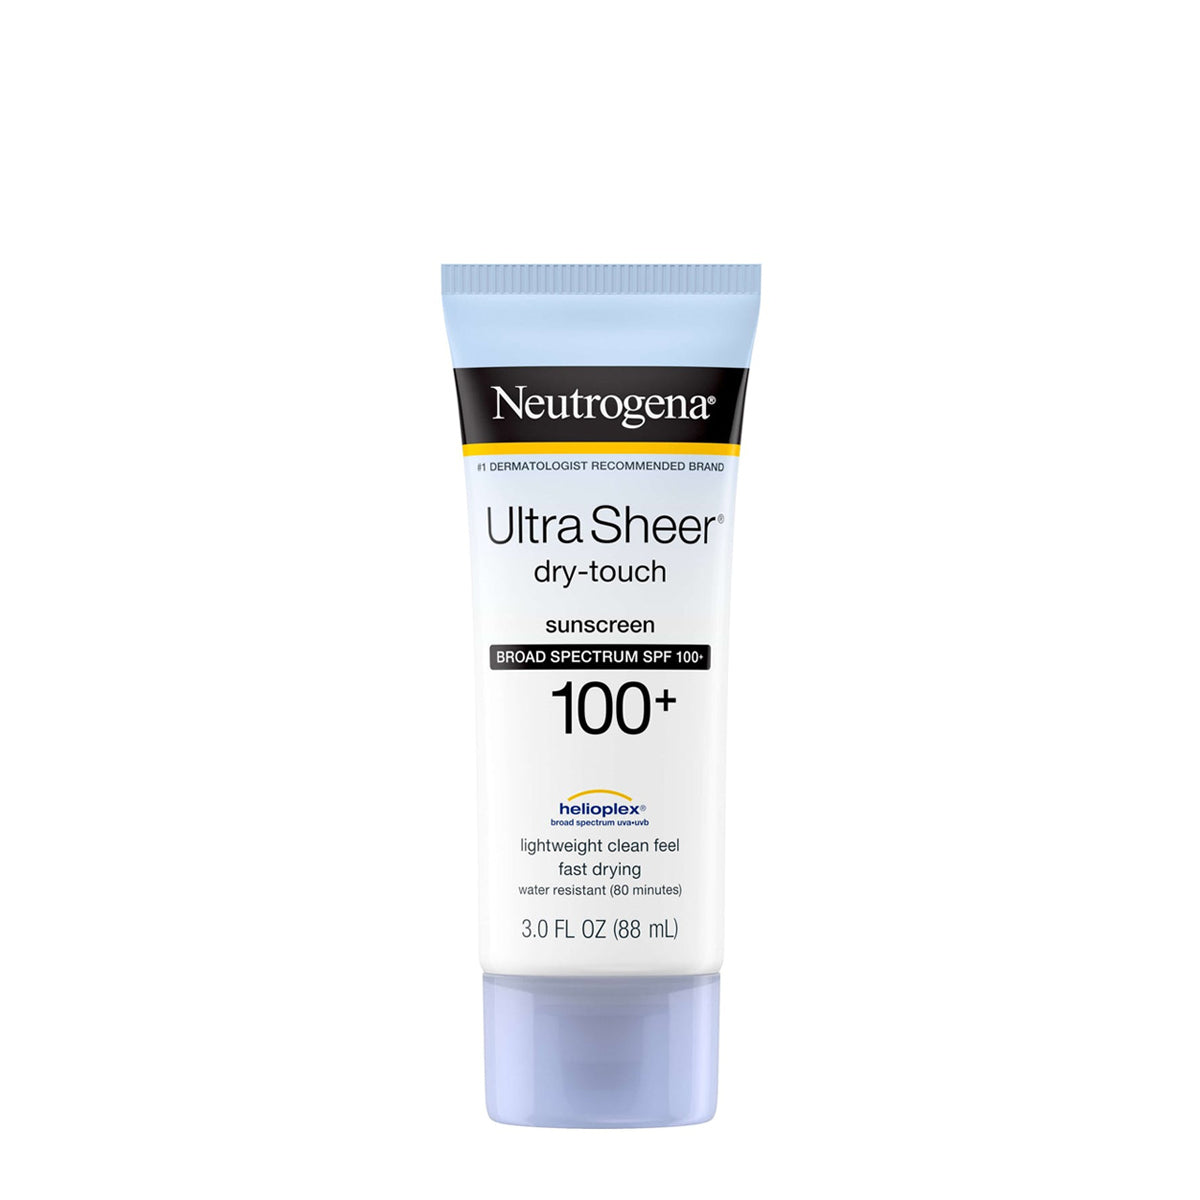 Neutrogena Ultra Sheer Dry-Touch Sunscreen Broad Spectrum SPF 100+